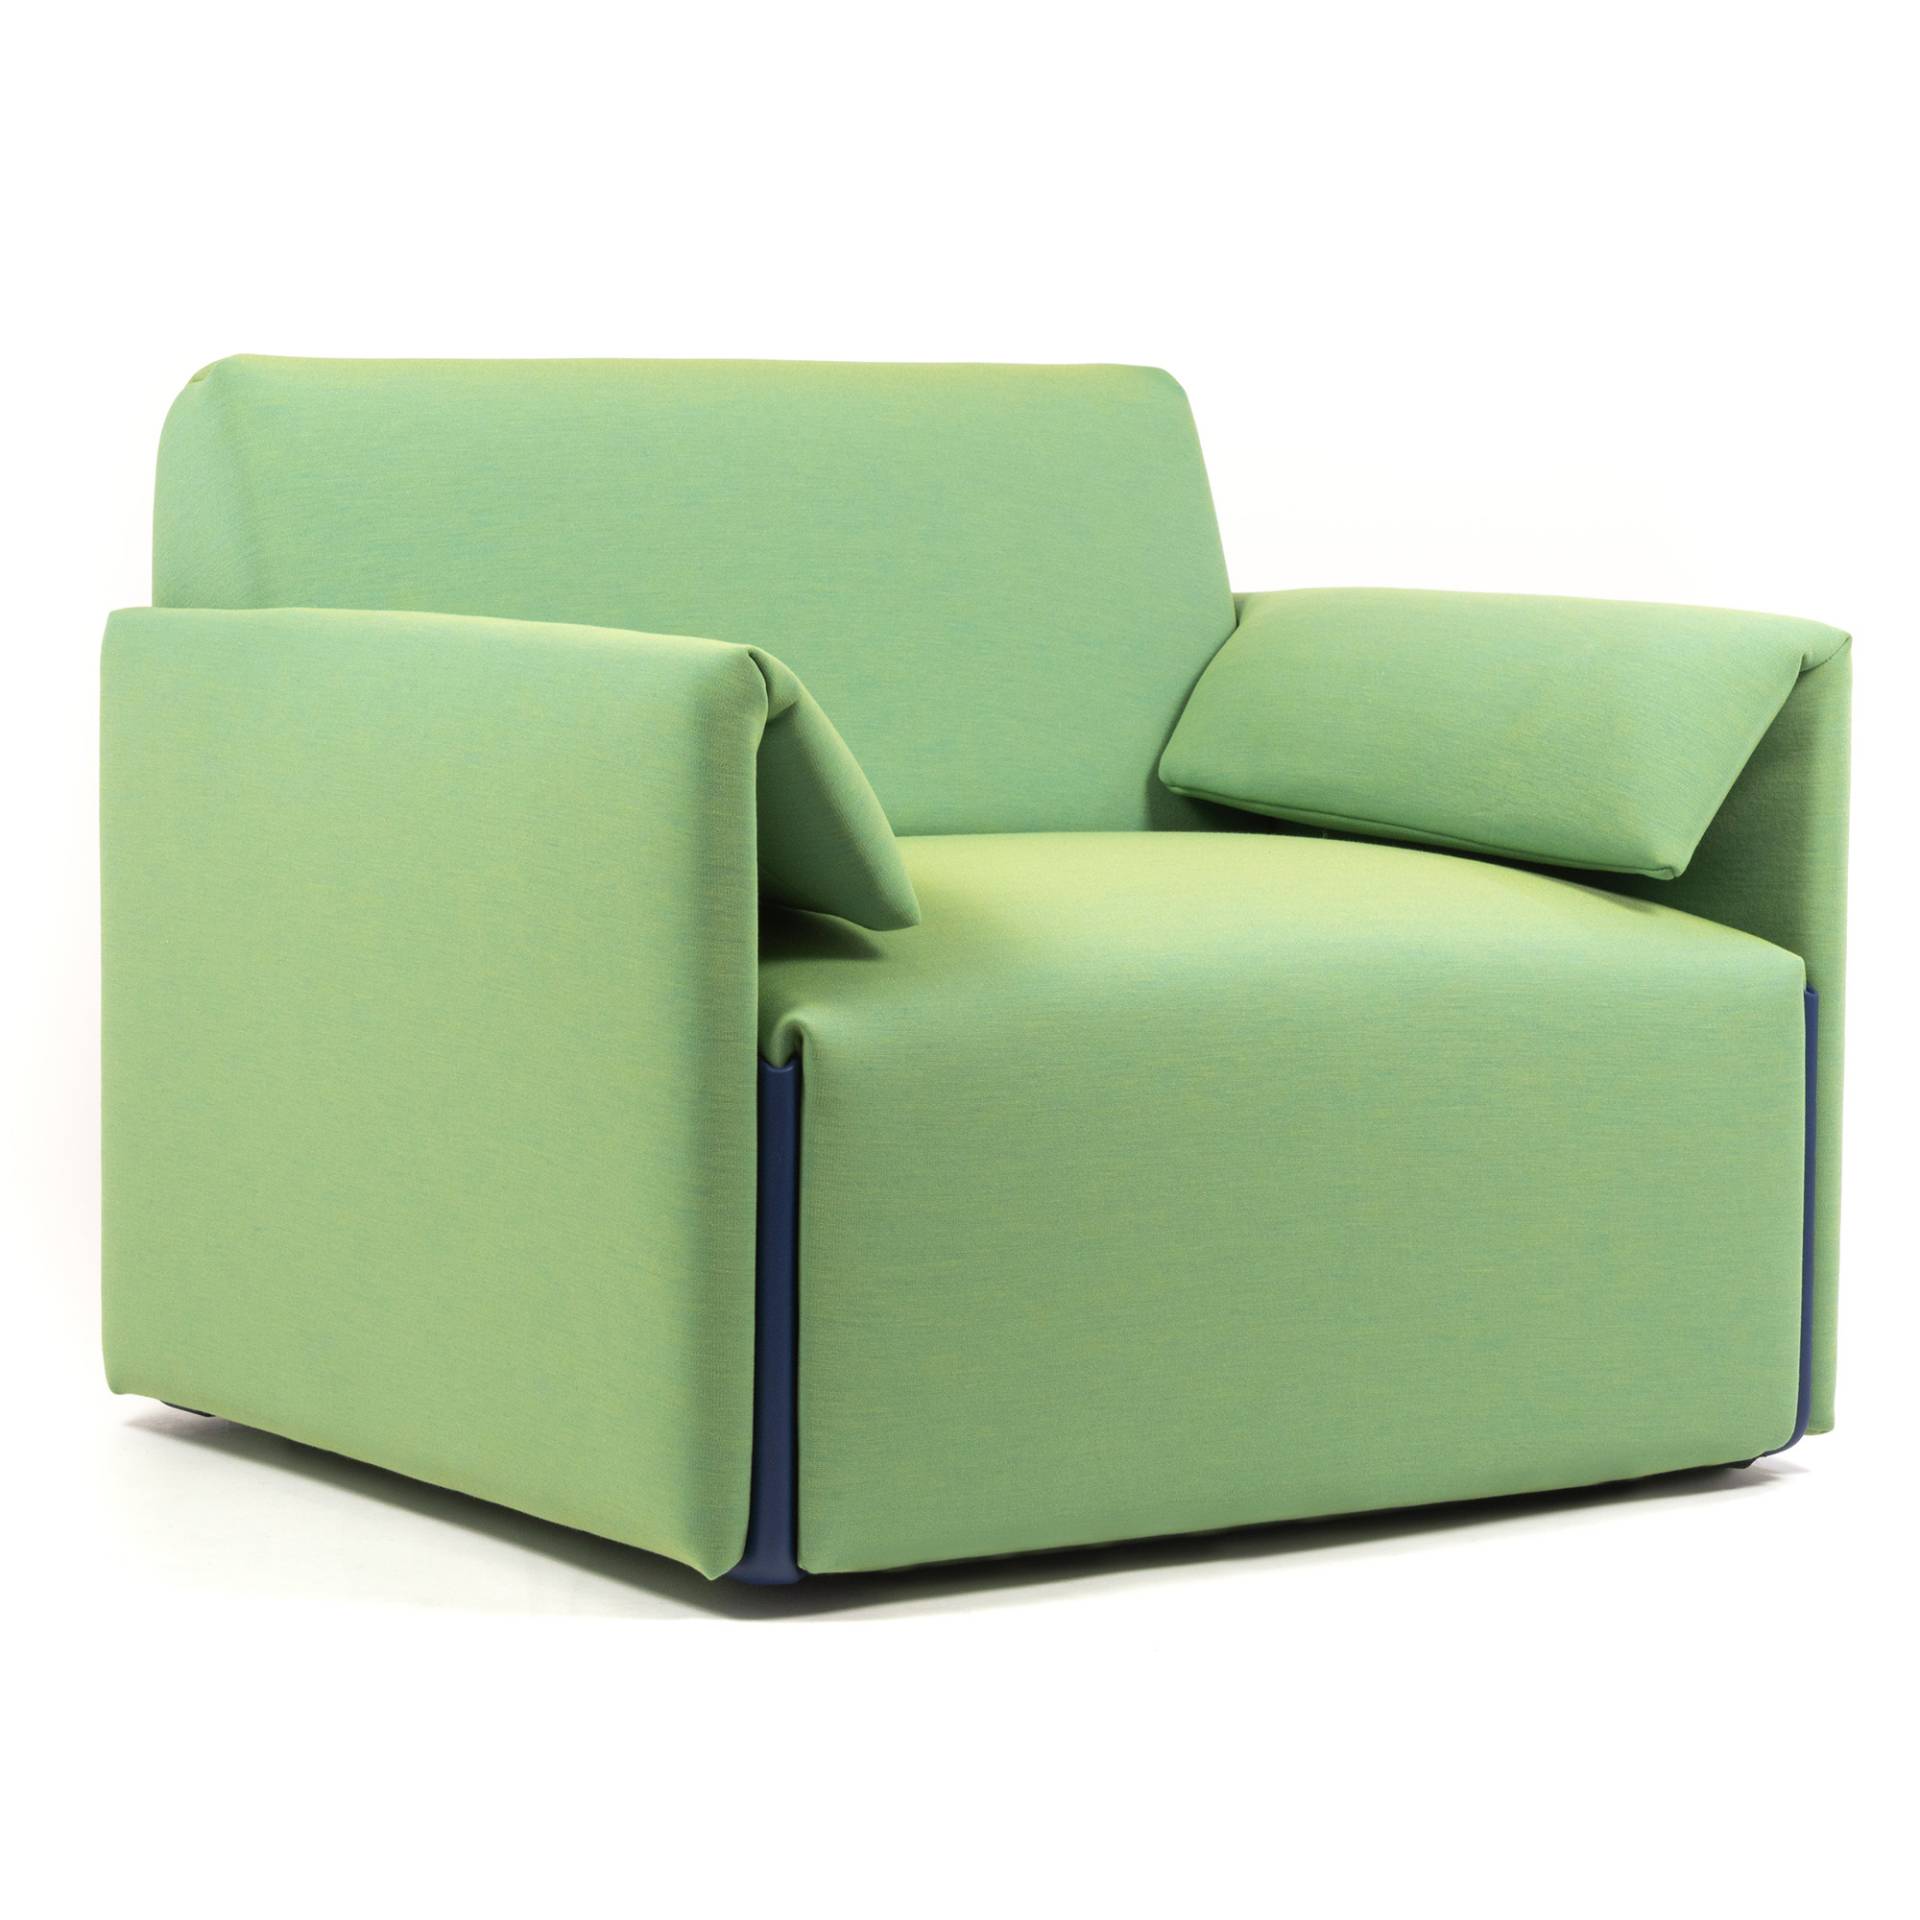 Magis - Costume Sessel 93x86x76cm - grün/Stoff Kvadrat Uniform Melange 963/Verbindungen Polypropylen blau 1790C/Innenstruktur Polyethylen recycelbar von Magis